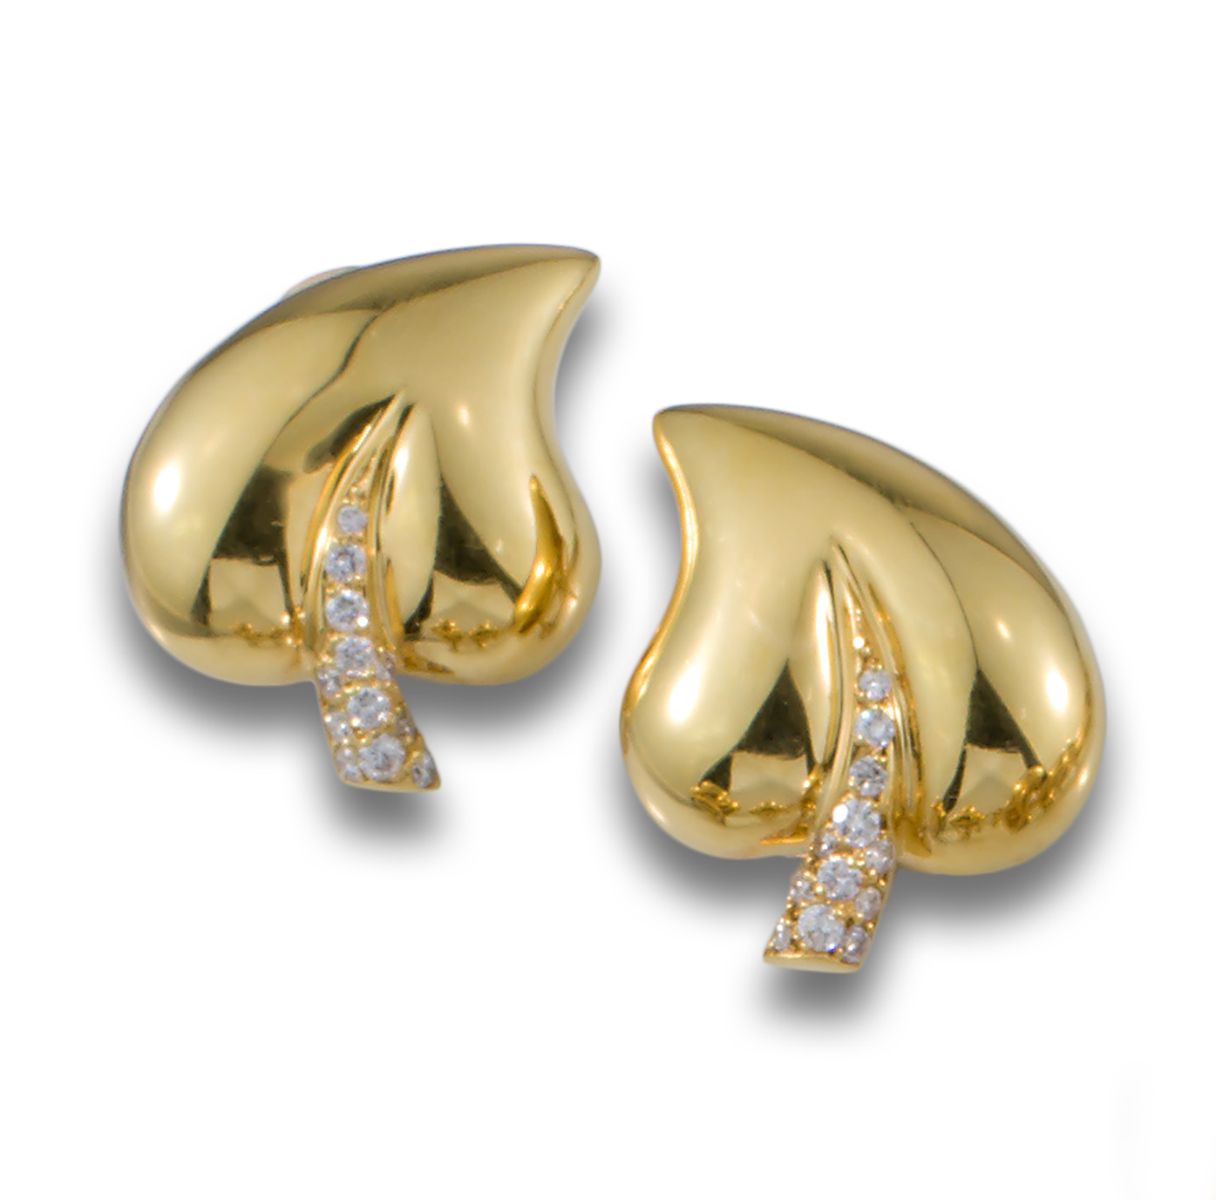 GOLD LEAF DIAMOND EARRINGS ANSORENA leaf design earrings, 18kt yellow gold, stem&hellip;